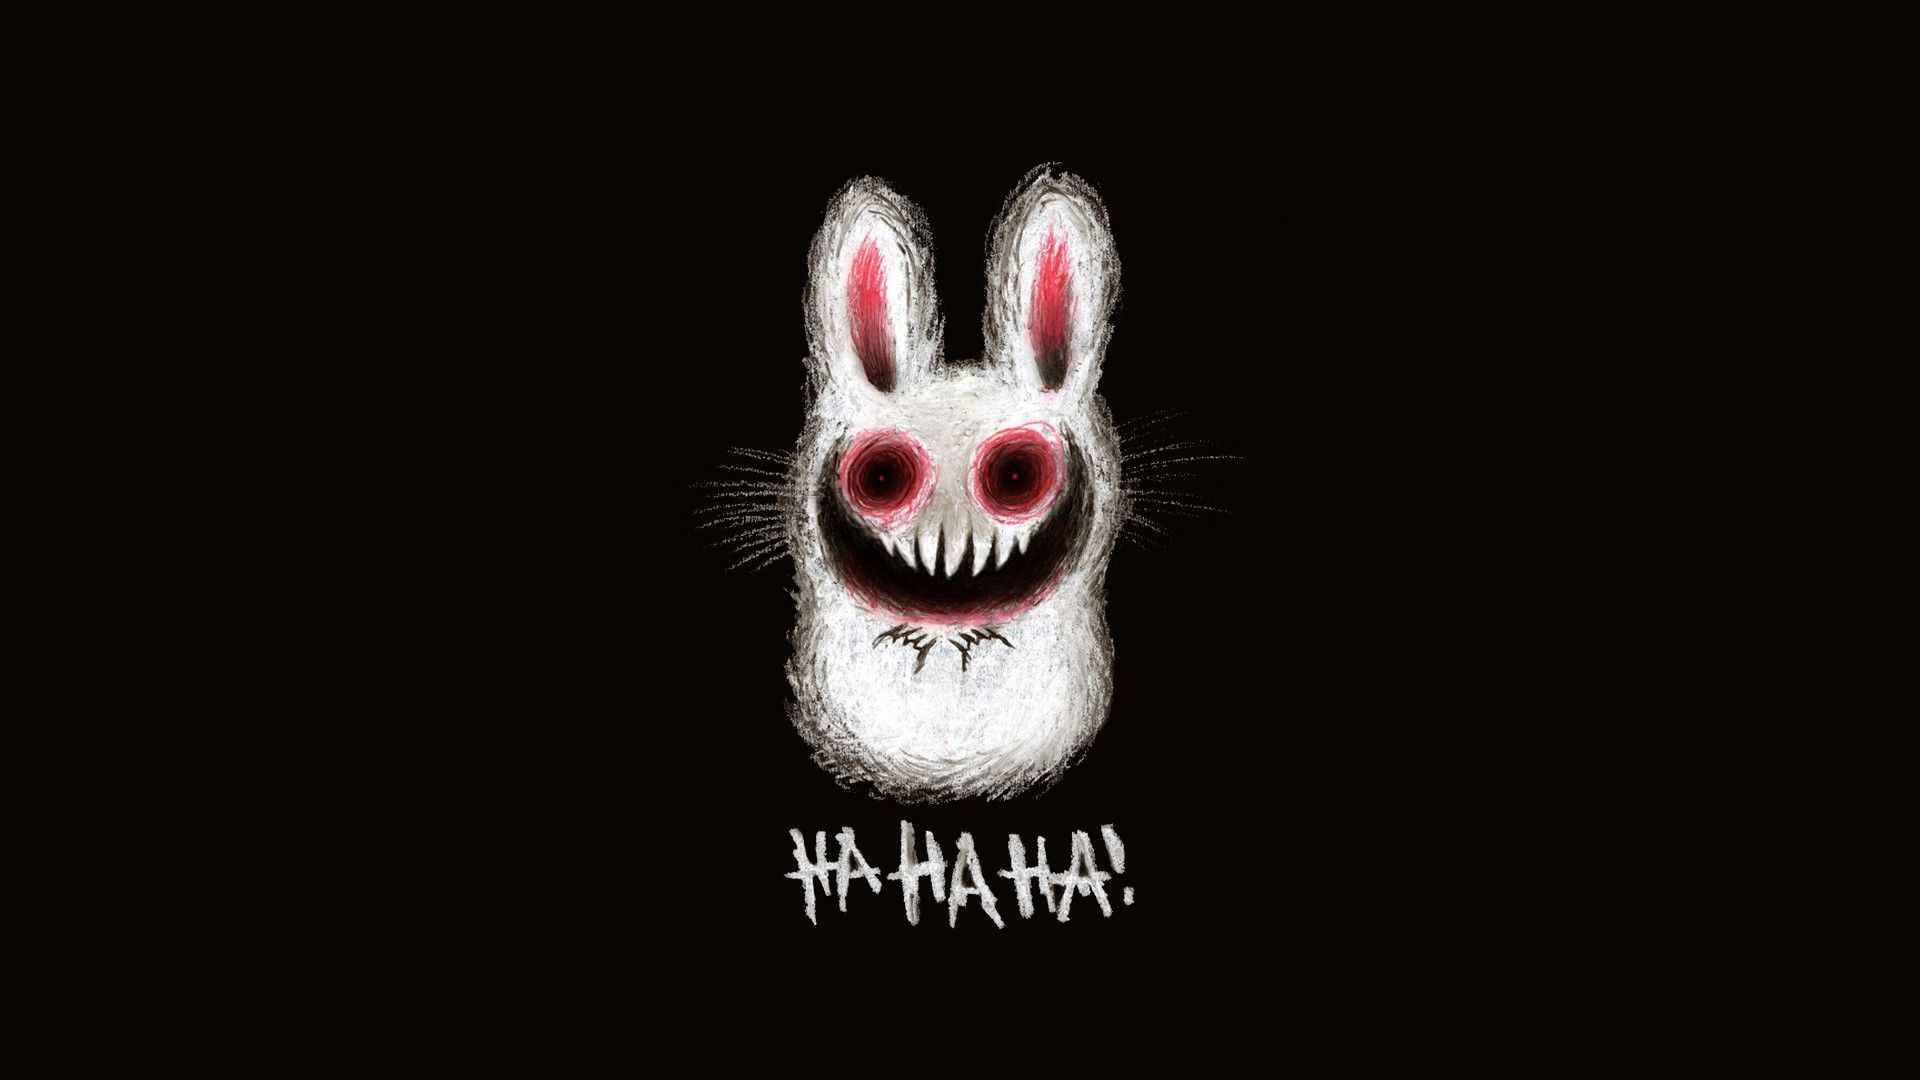 1920x1080  Creepy bunny wallpaper, cute adorable fluffy scary bunny rabbit .